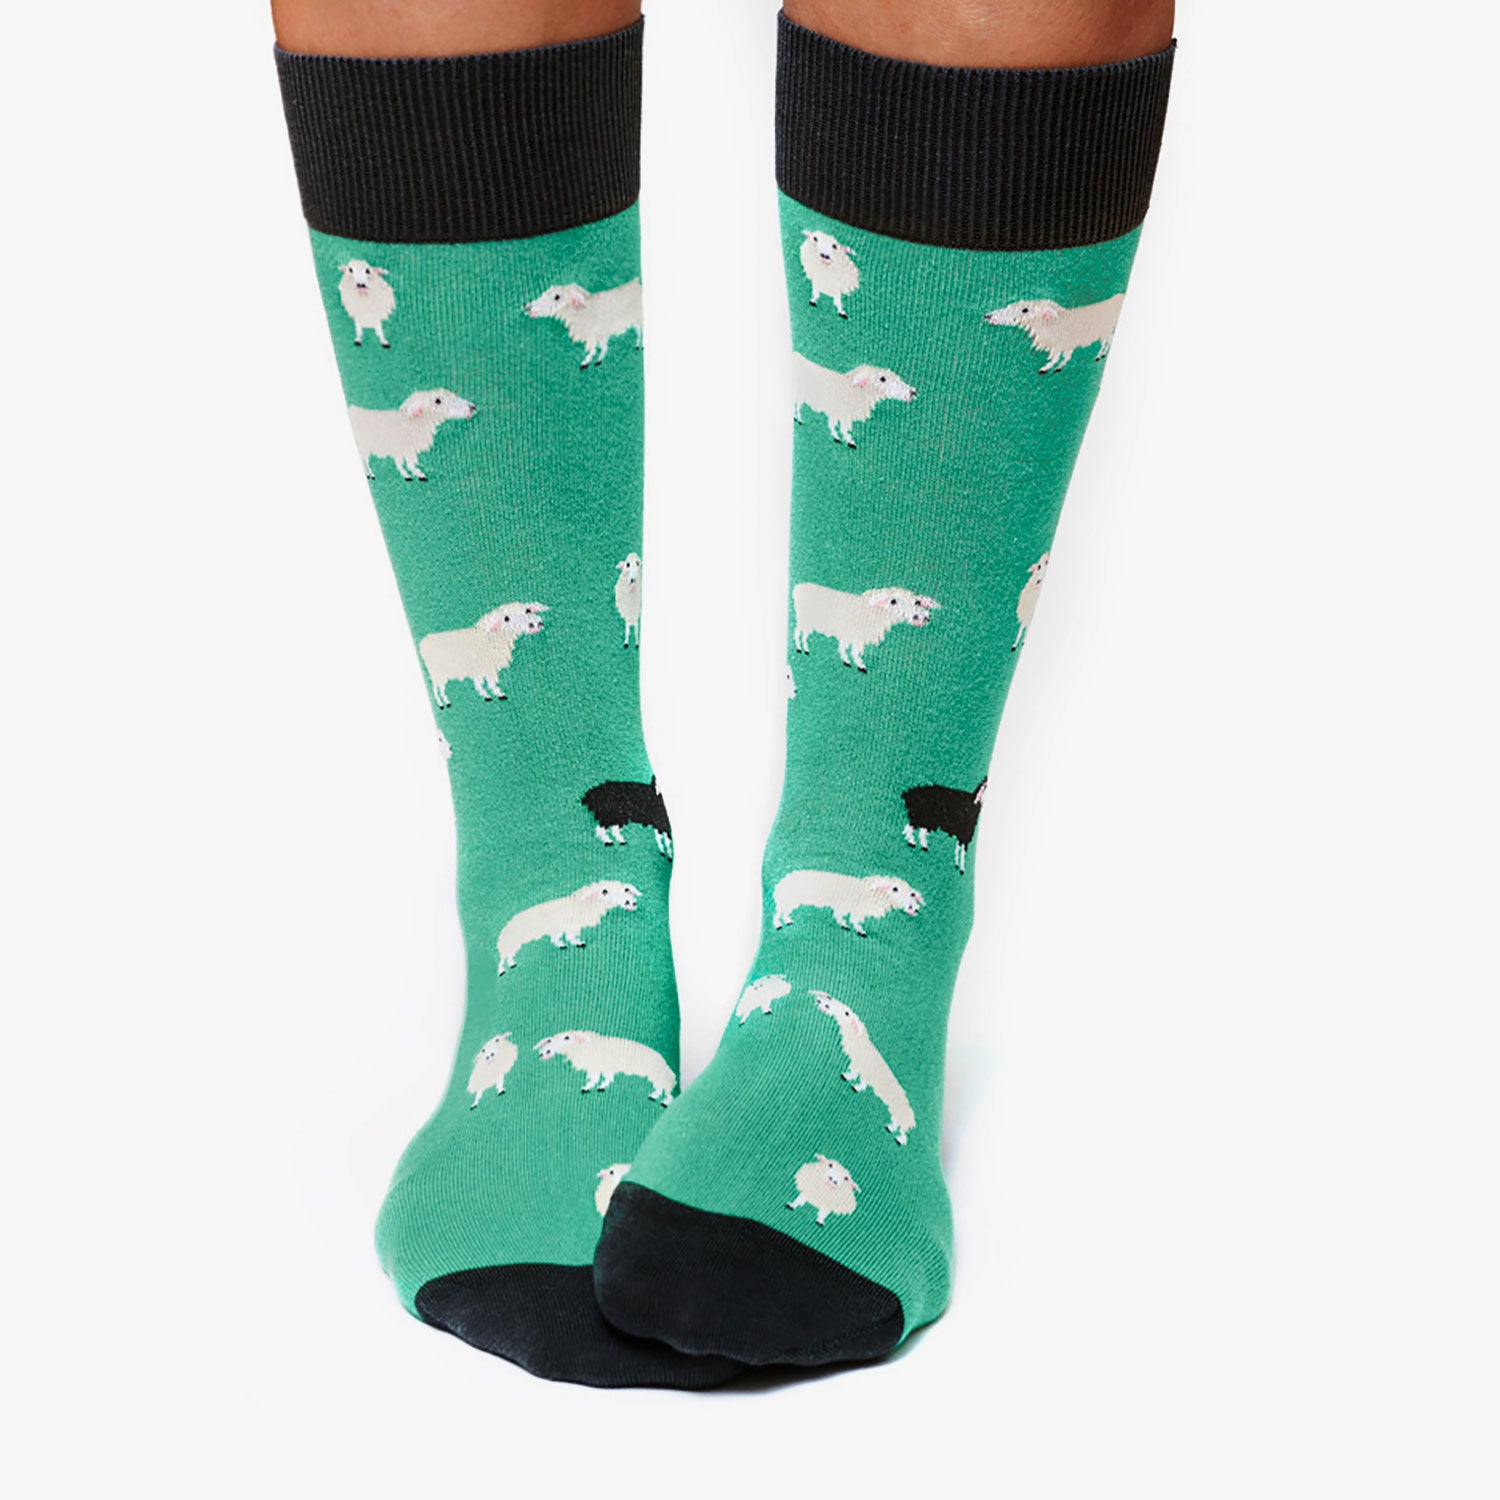 Blue Sheep Animal Socks